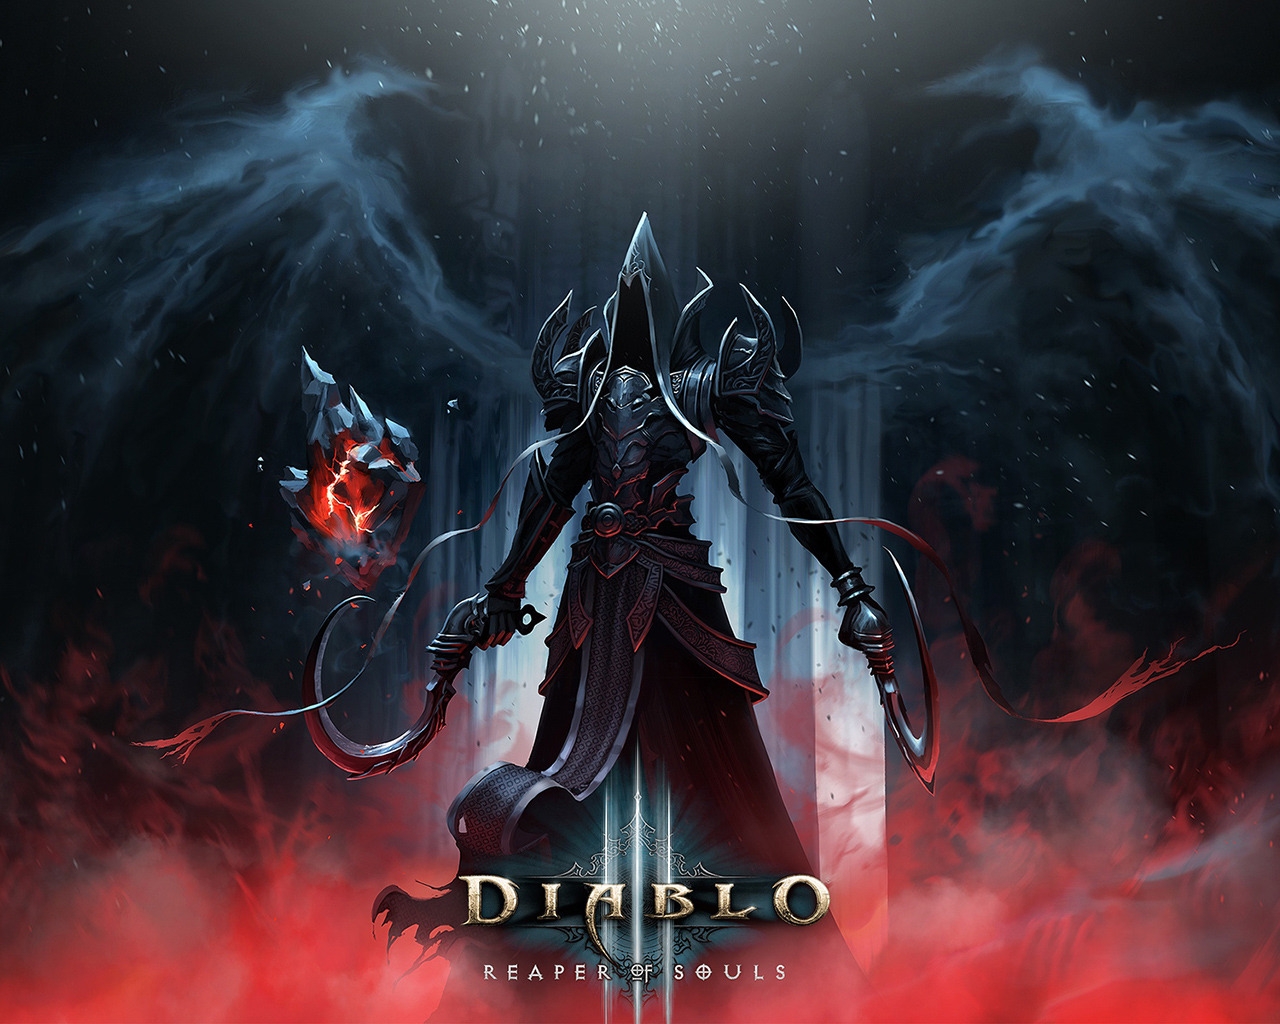 Diablo 3 Reaper of Souls for 1280 x 1024 resolution